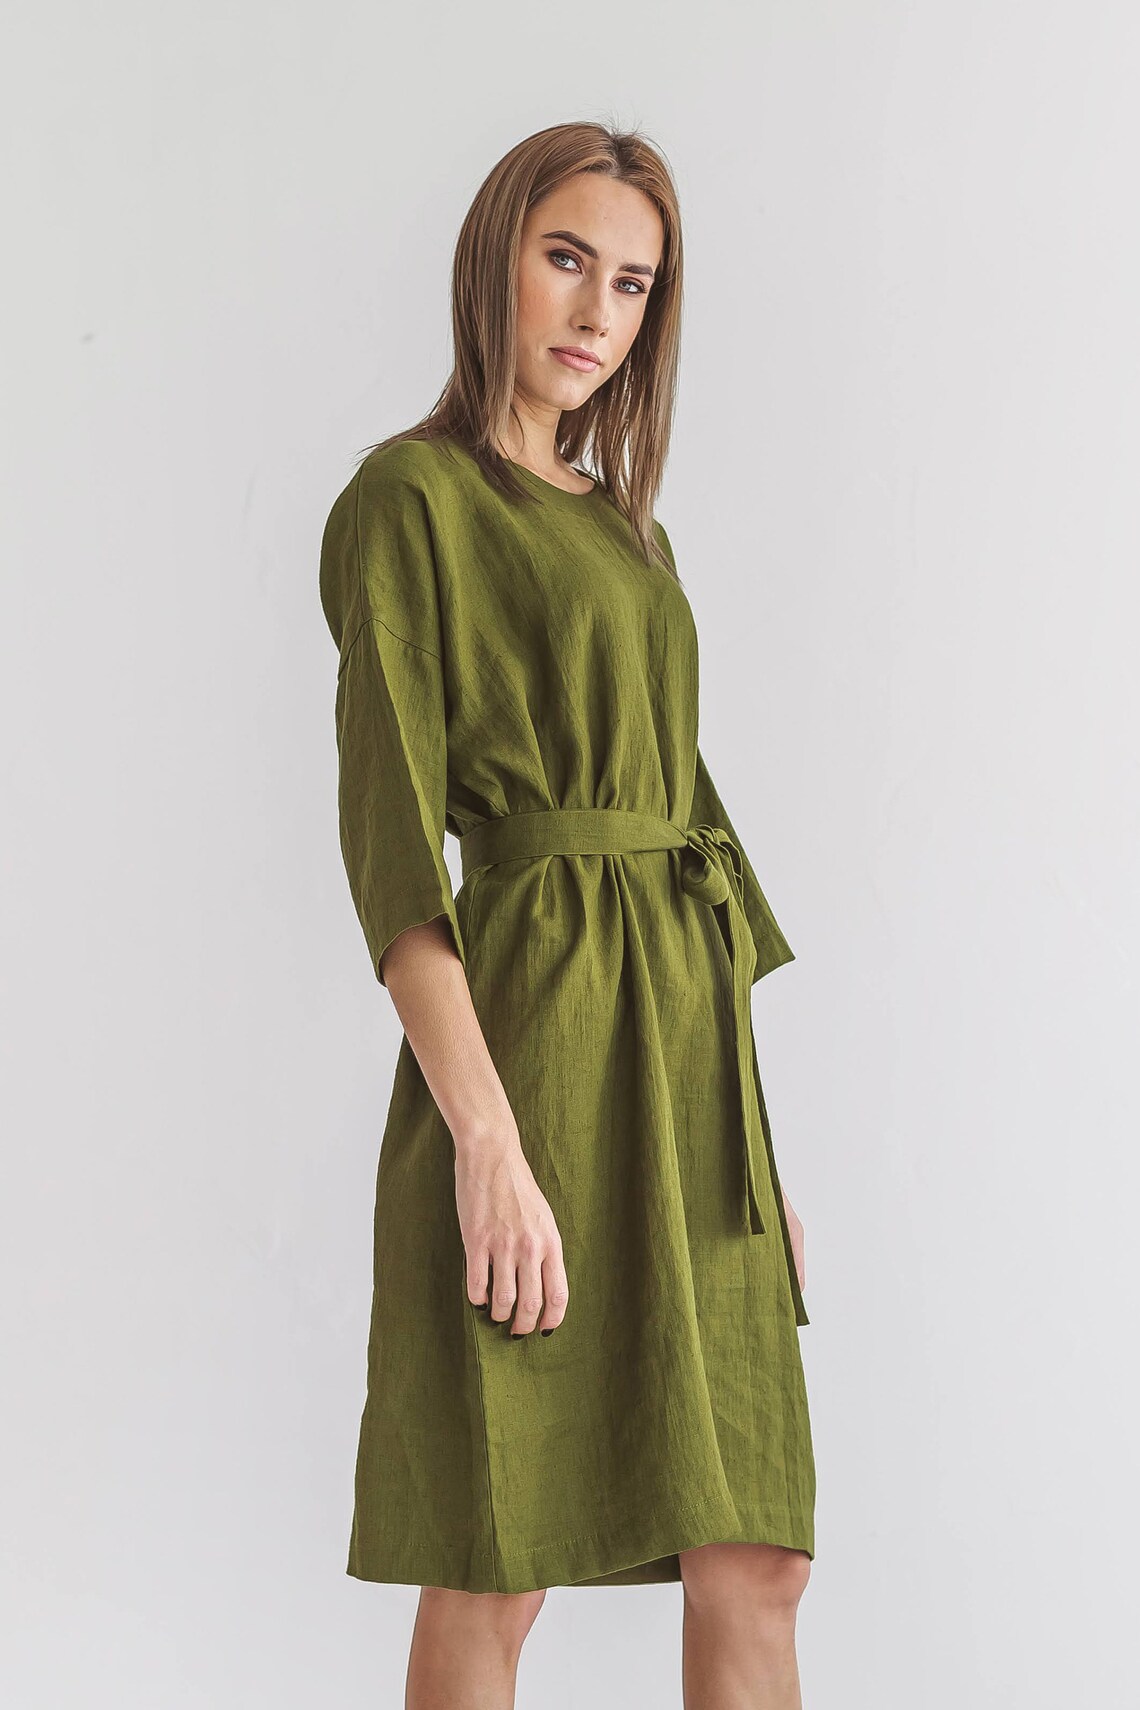 Linen dress 3/4 sleeves summer dress with belt | Etsy